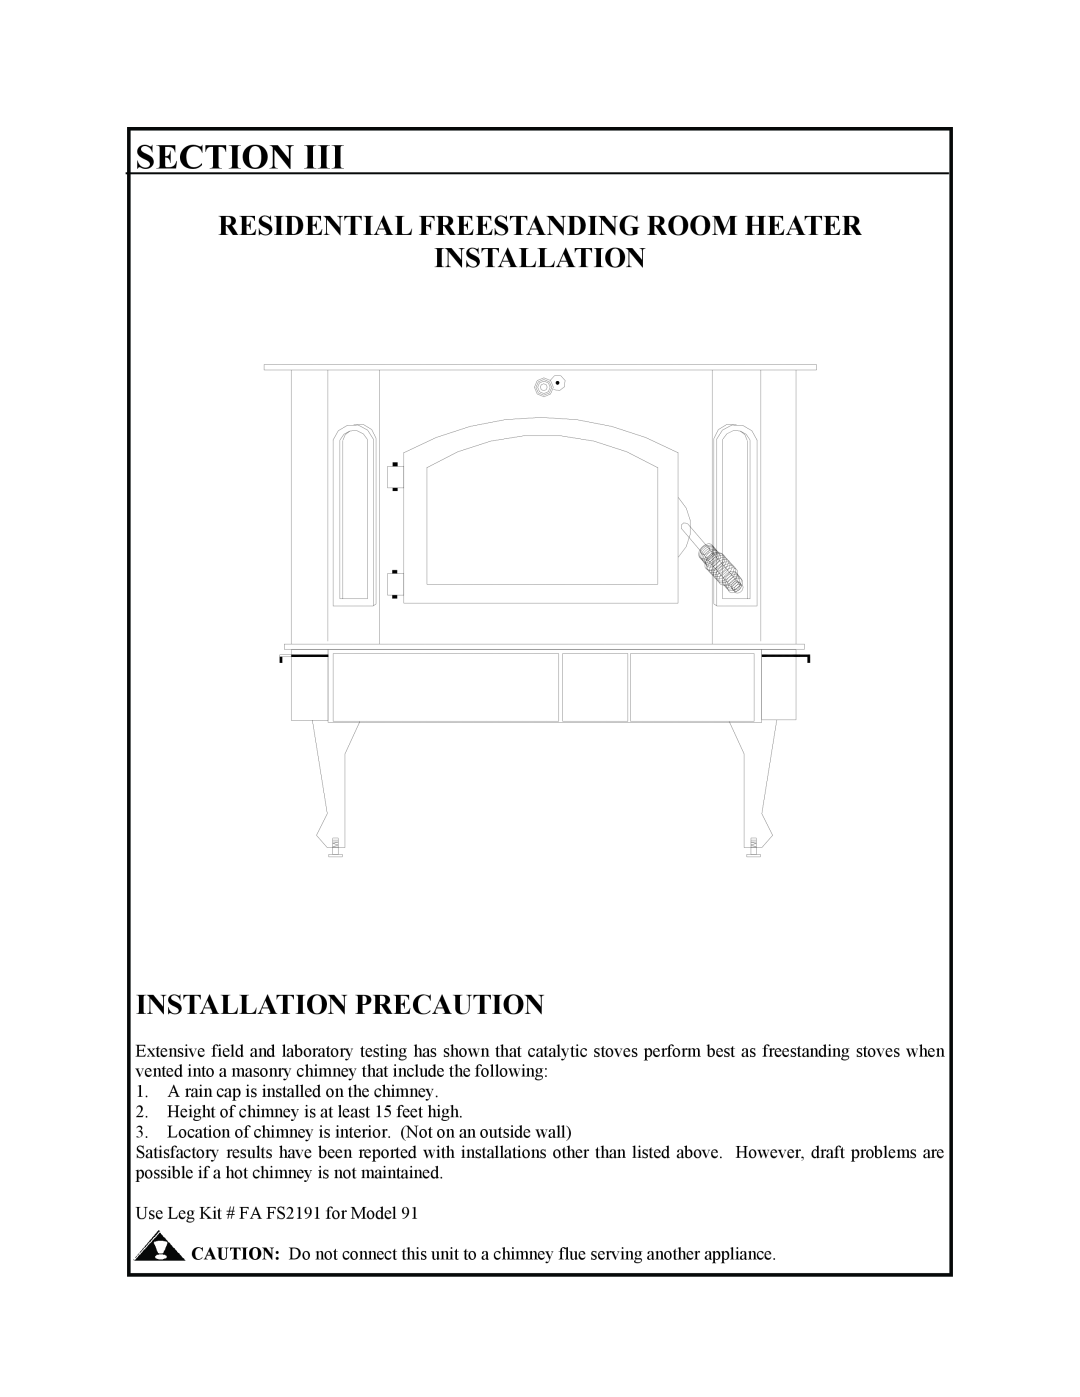 New Buck Corporation 91 manual Section, Residential Freestanding Room Heater Installation, Installation Precaution 